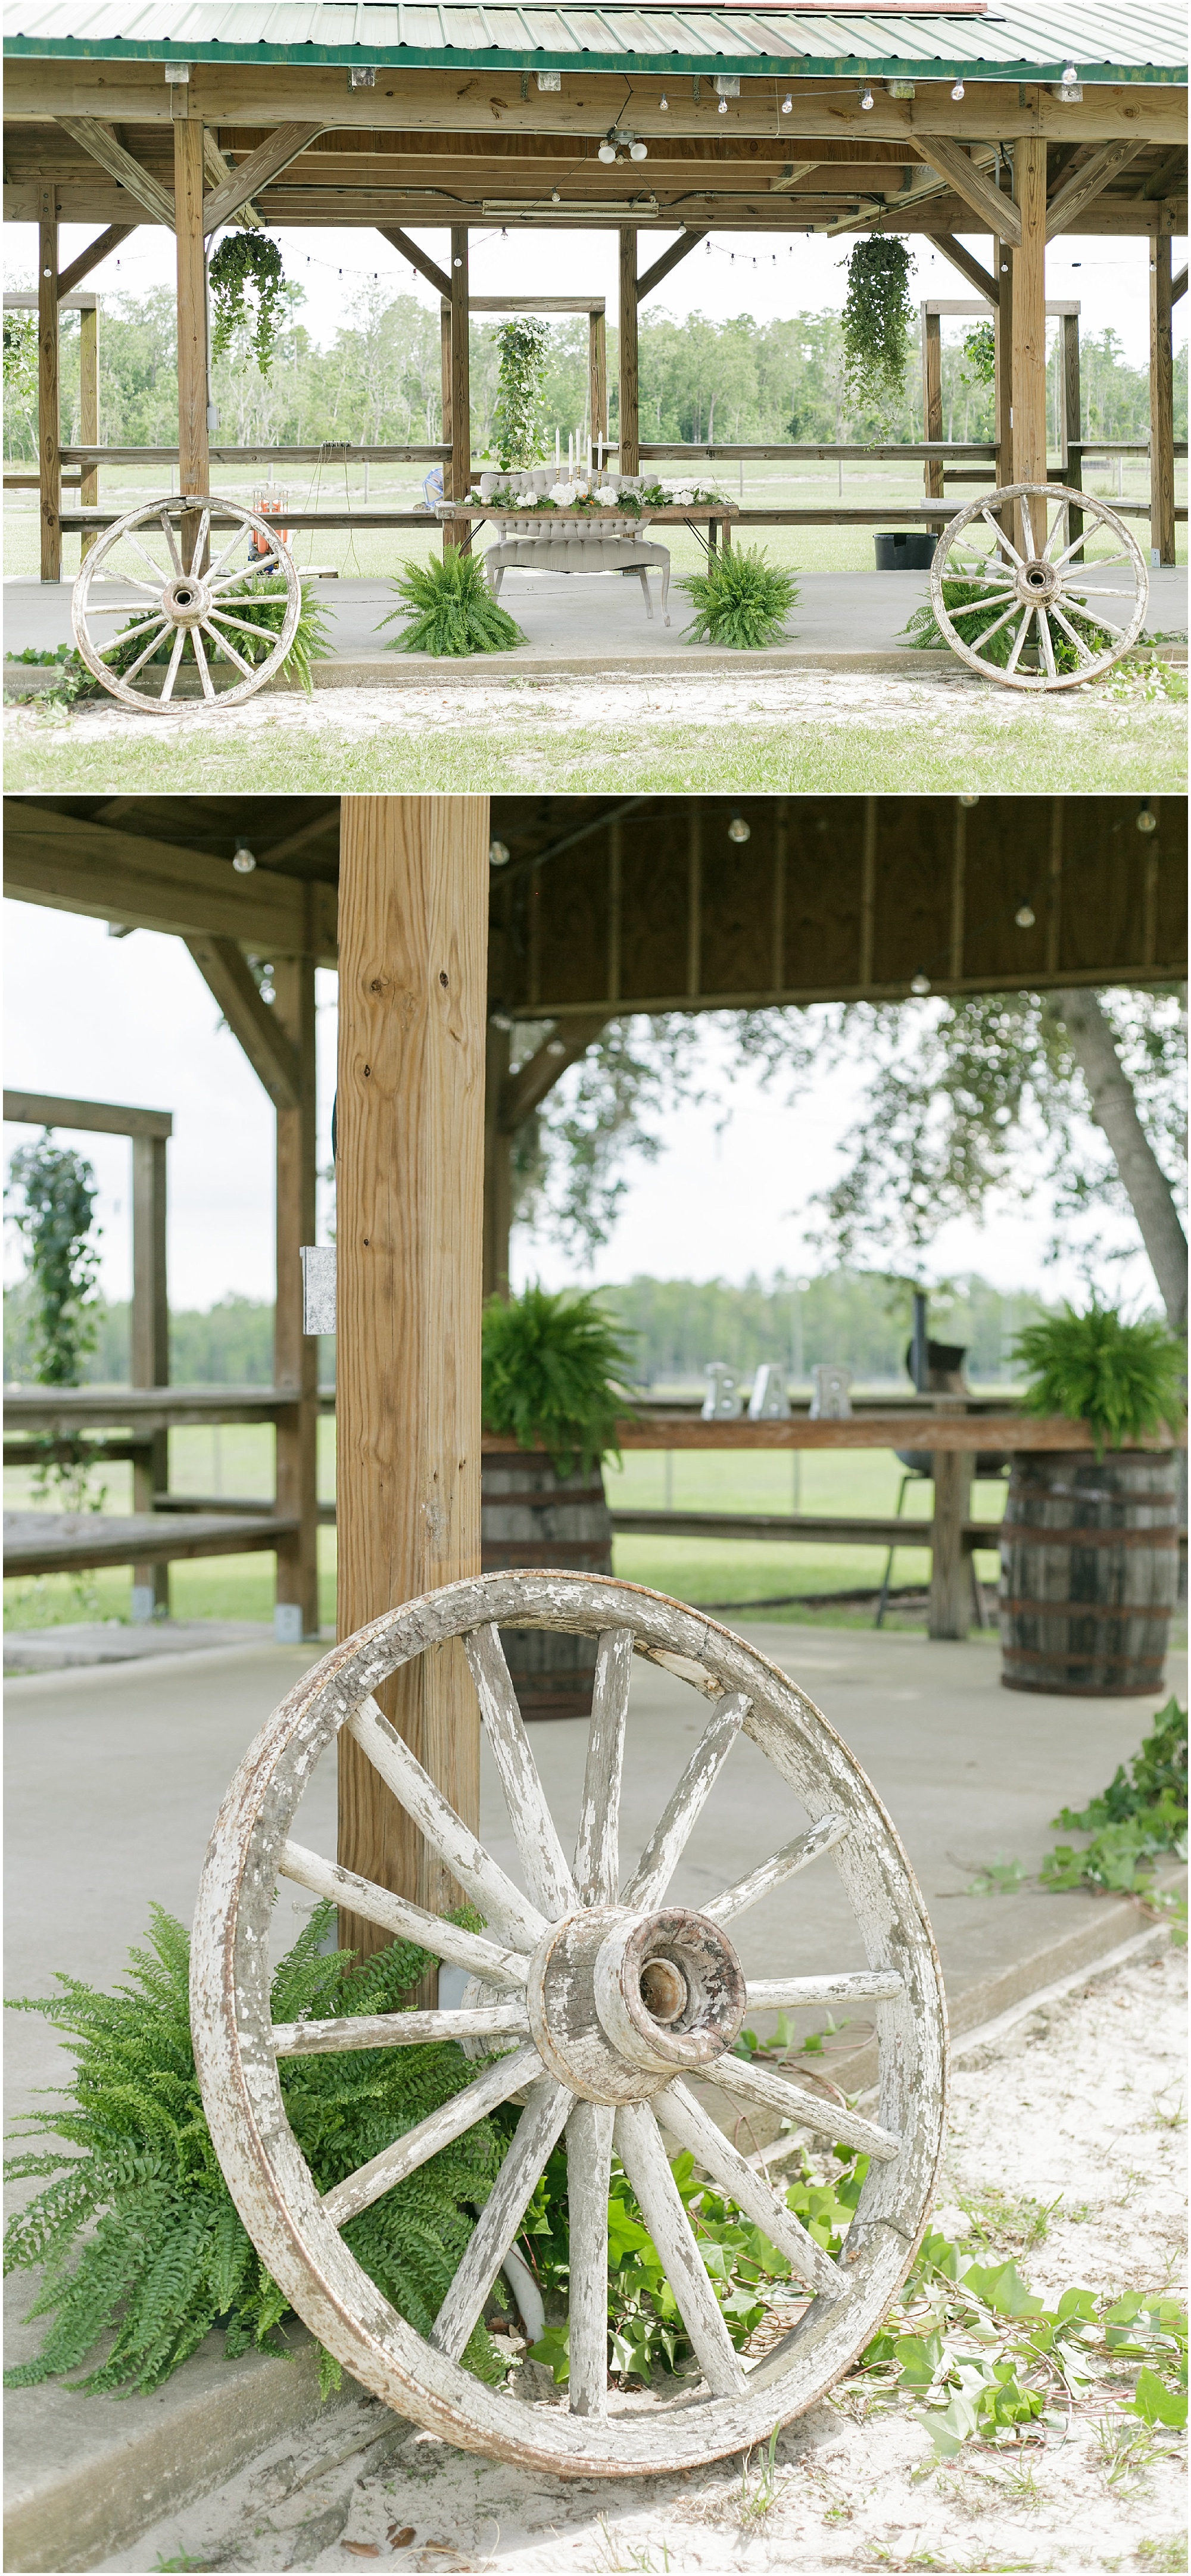 Wagon wheel used to decorate sweetheart table setup. 